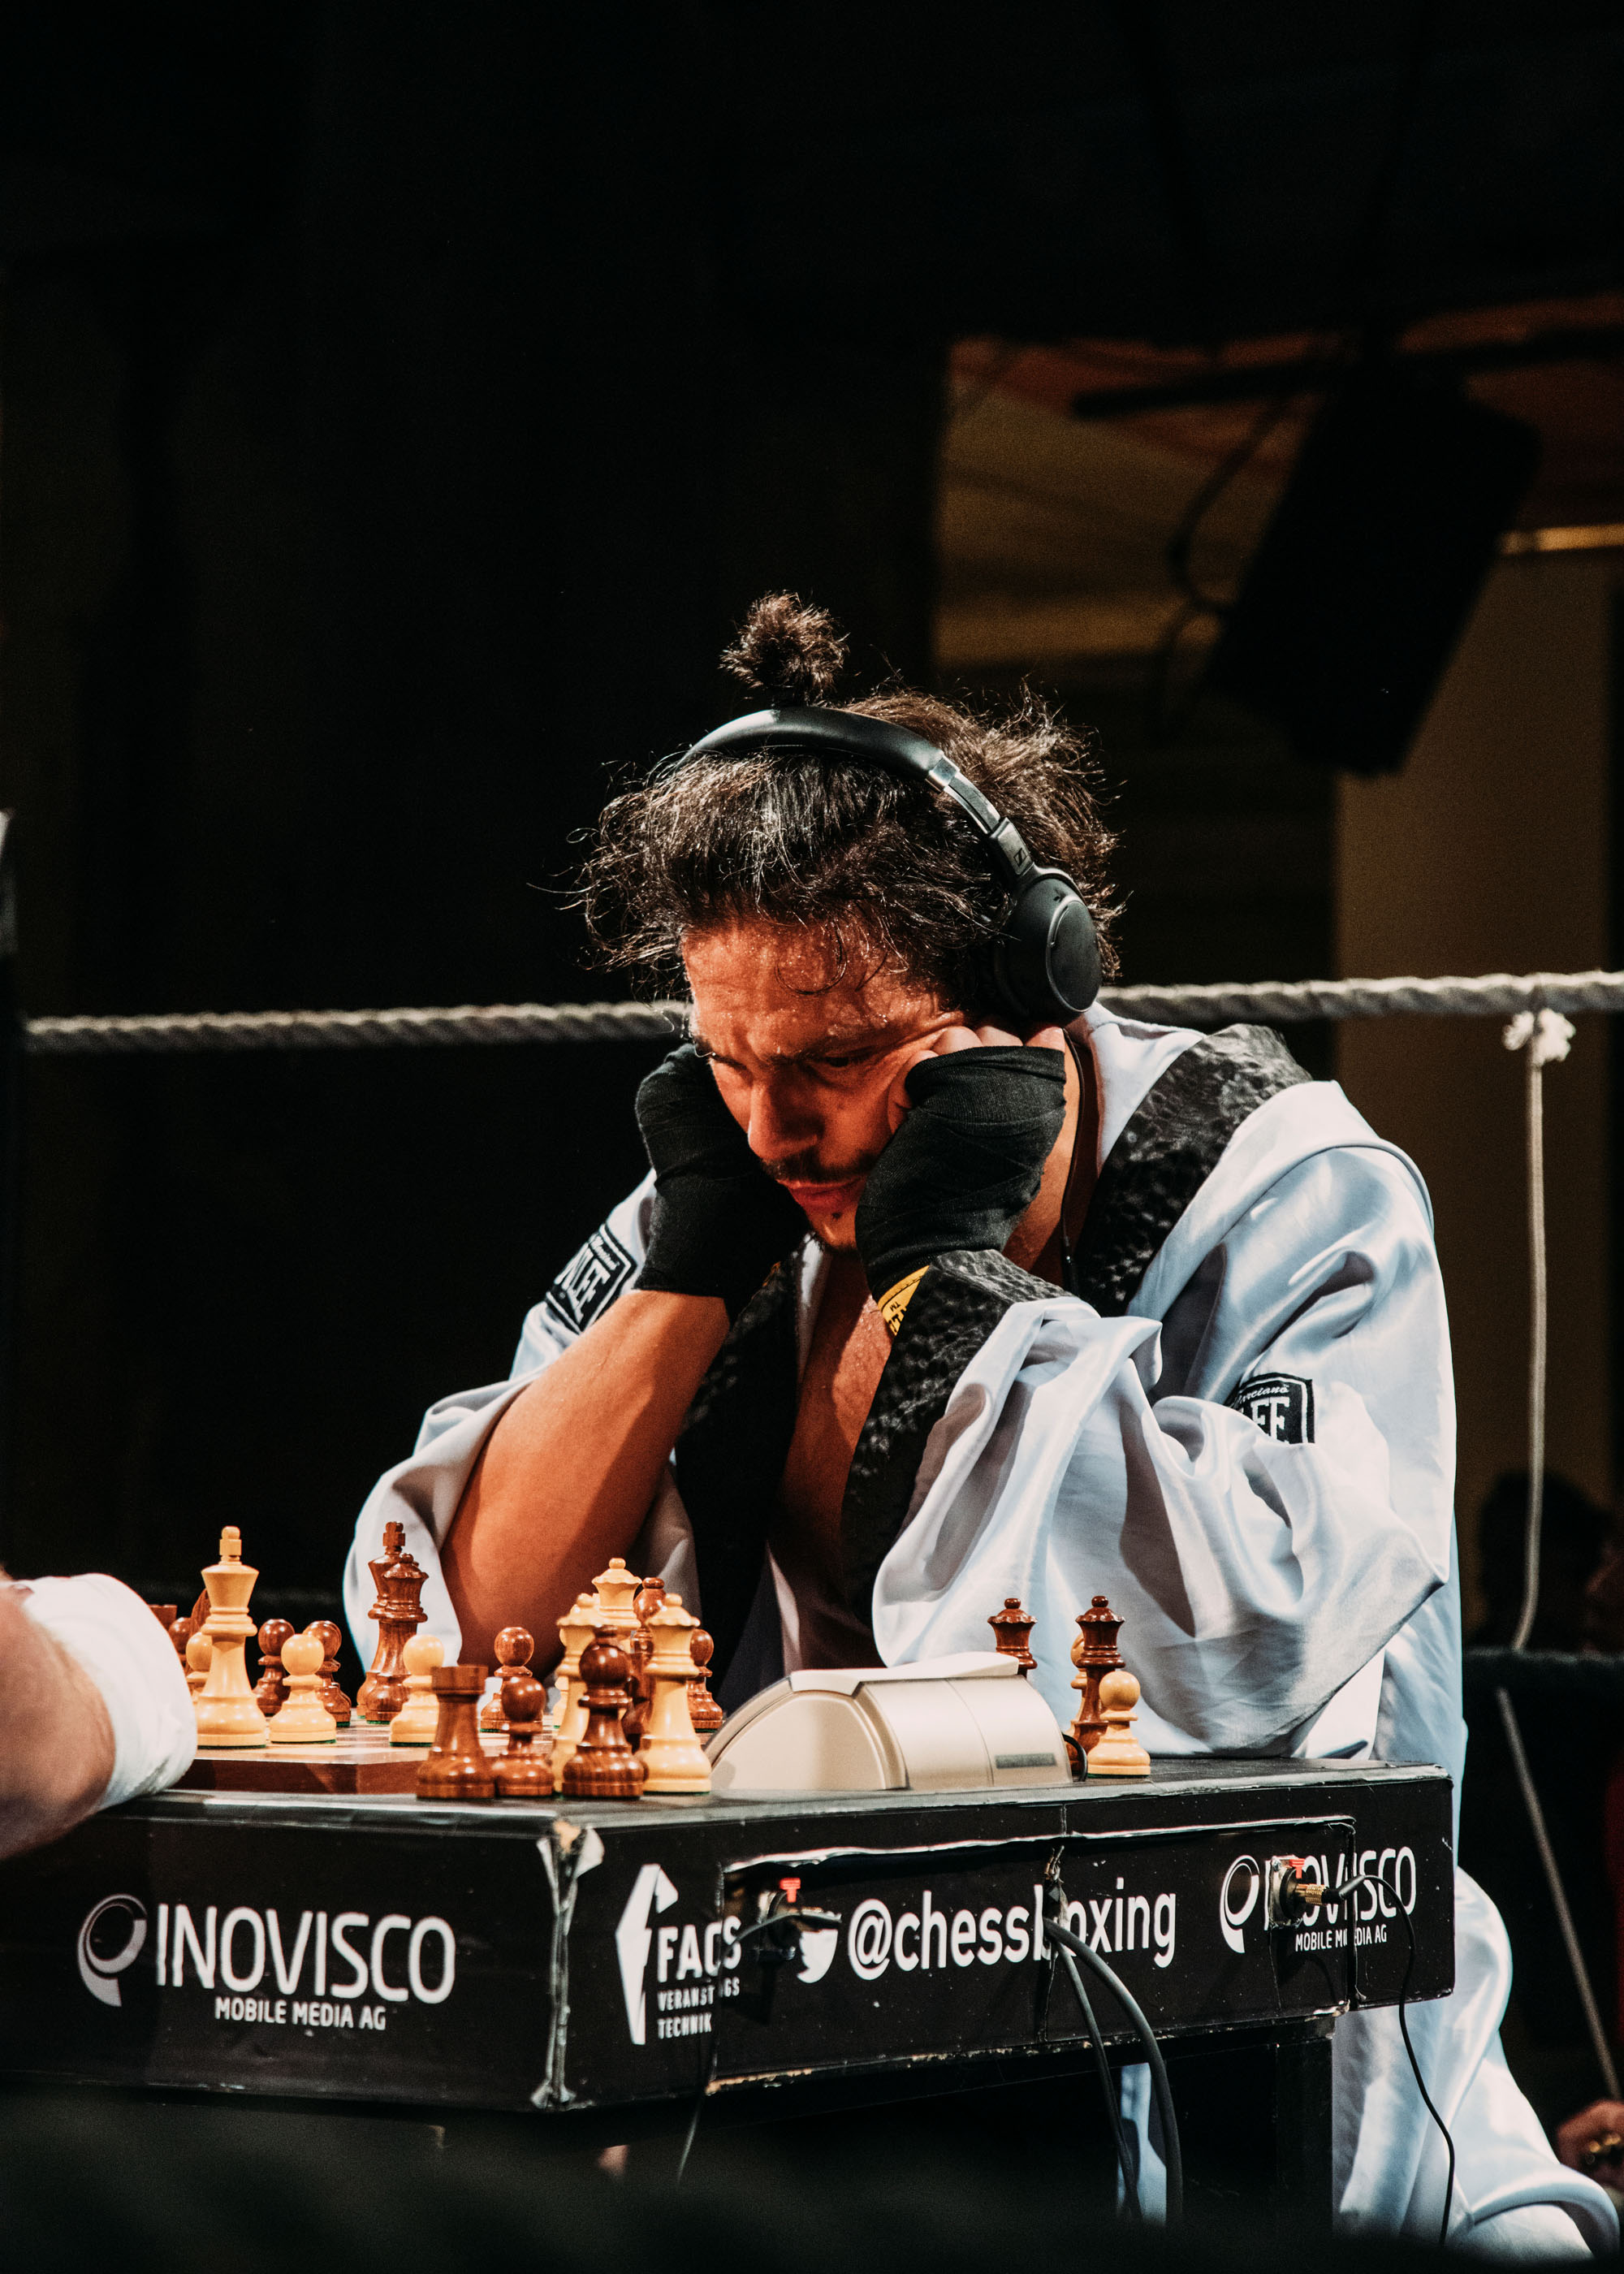 #editorial #chess #boxing #perdiz #querida #berlin